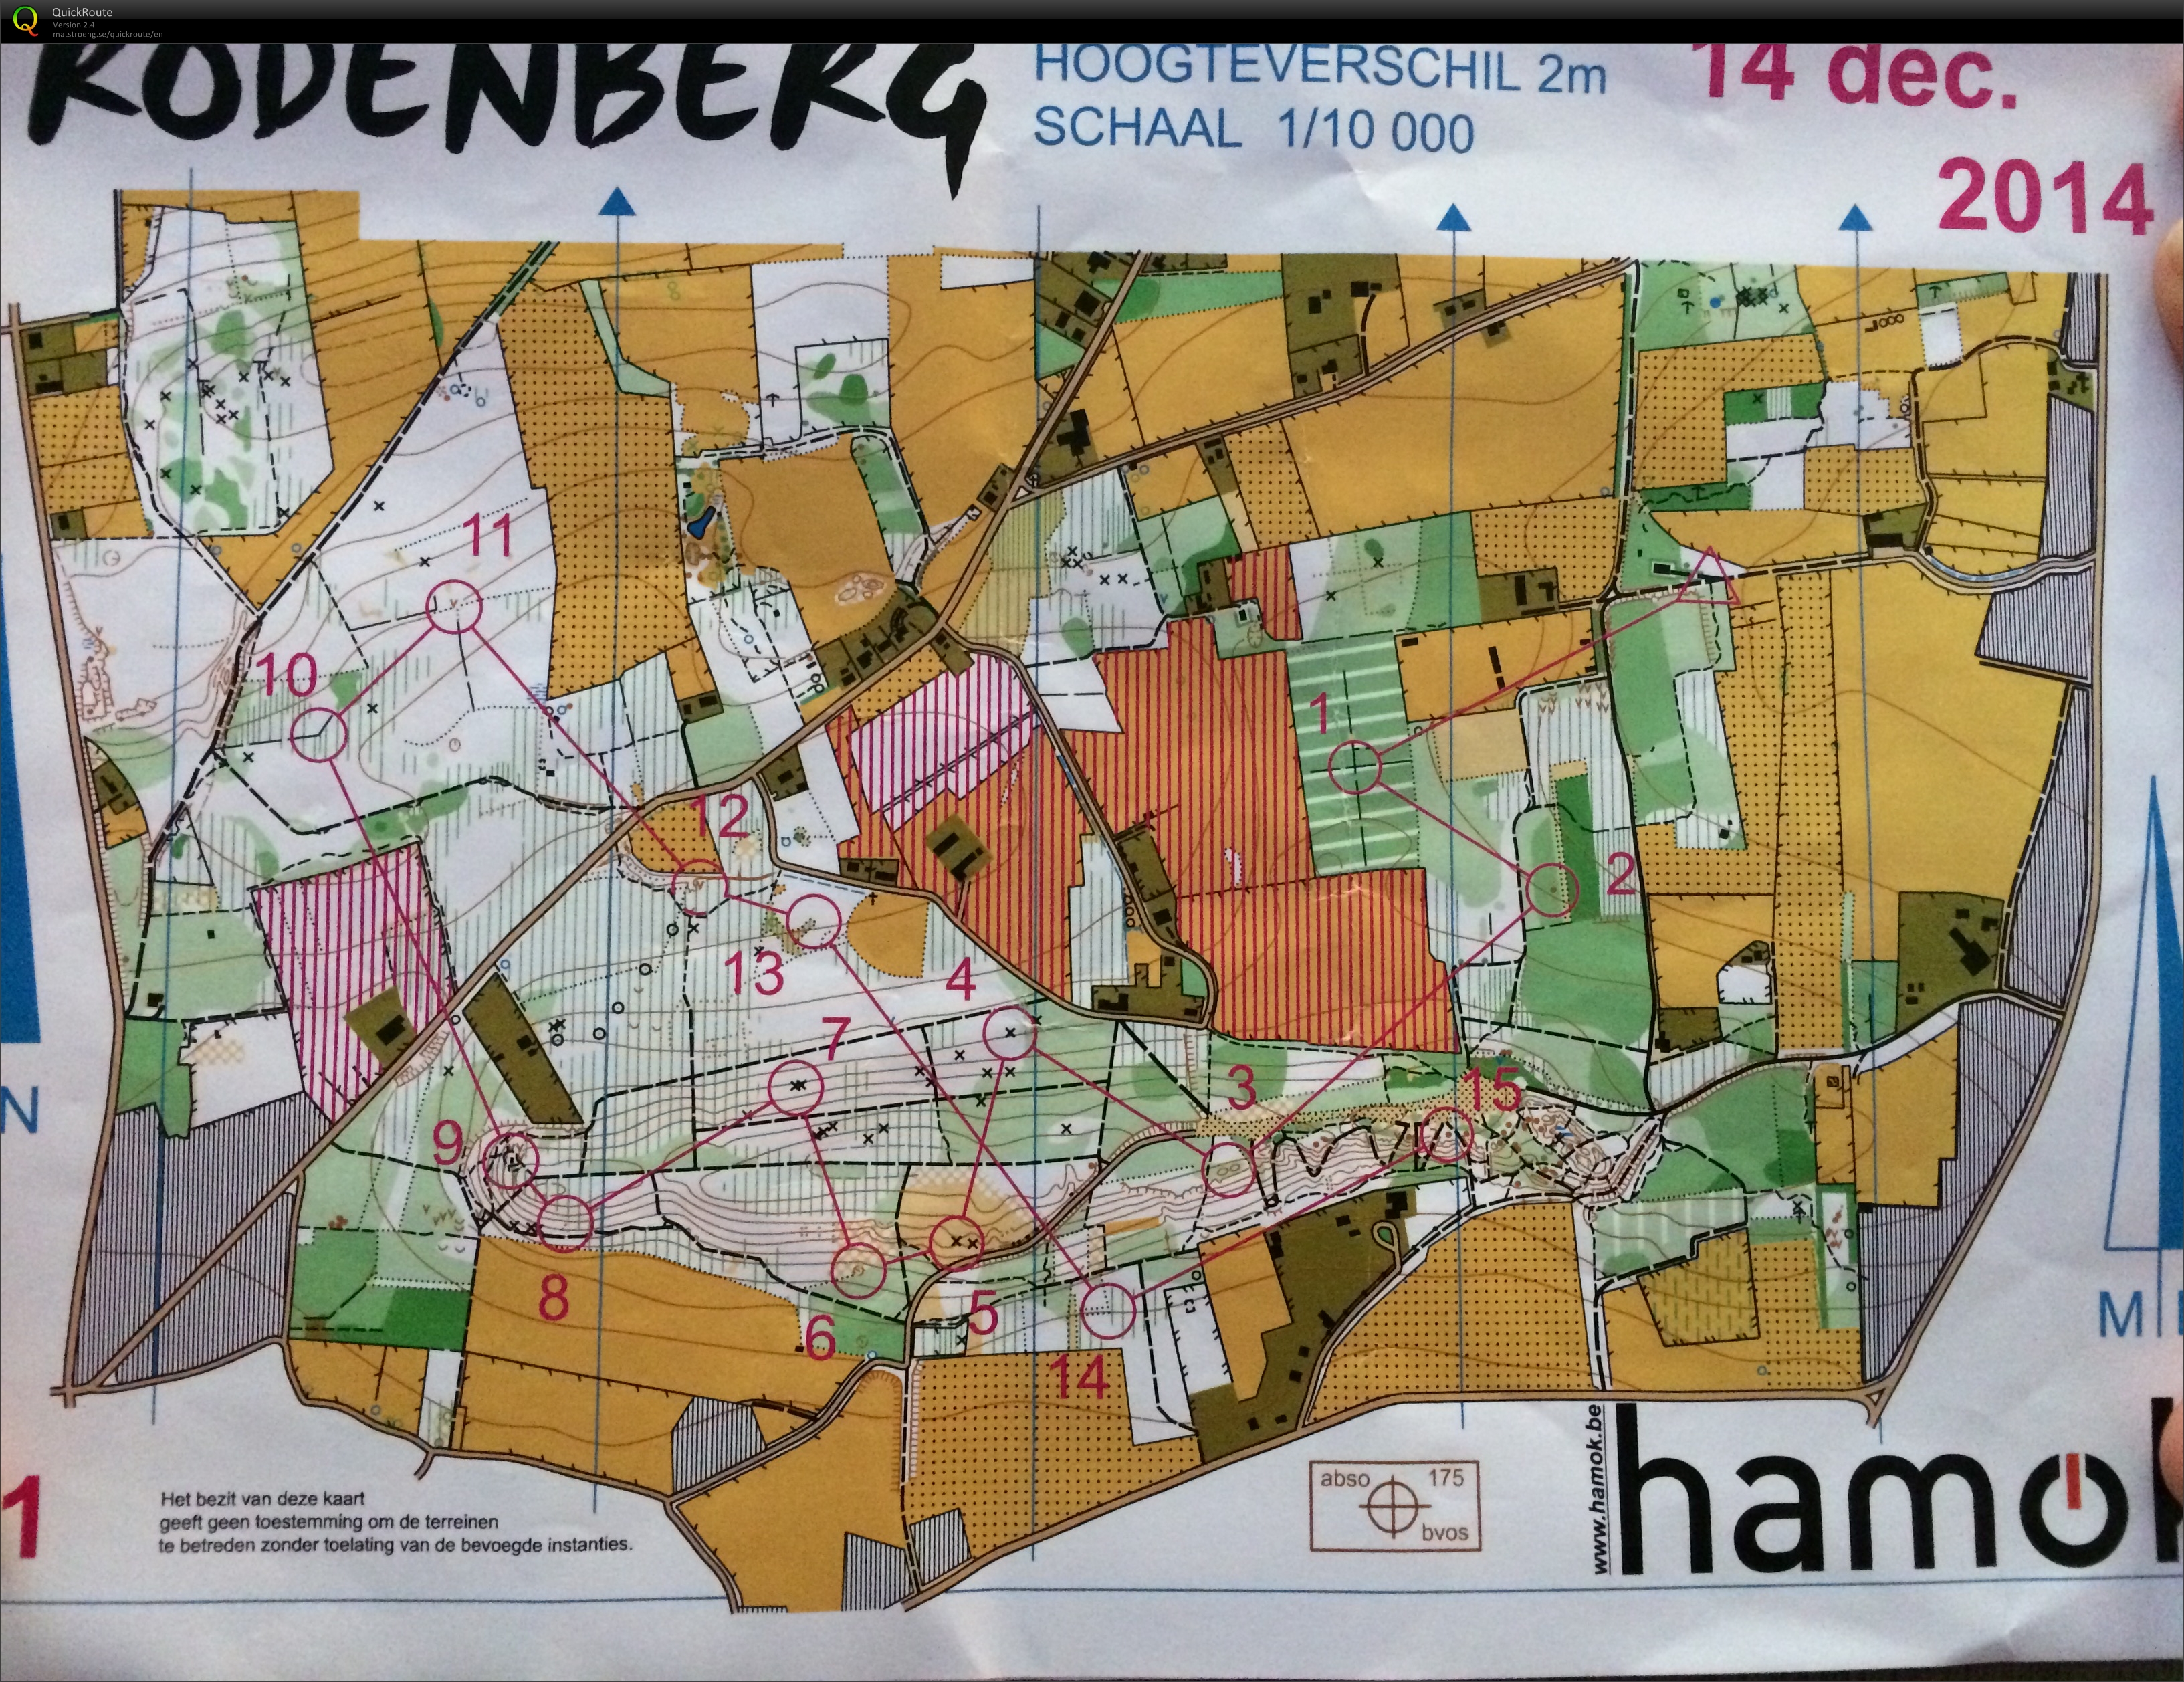 Rodenberg (2014-12-14)